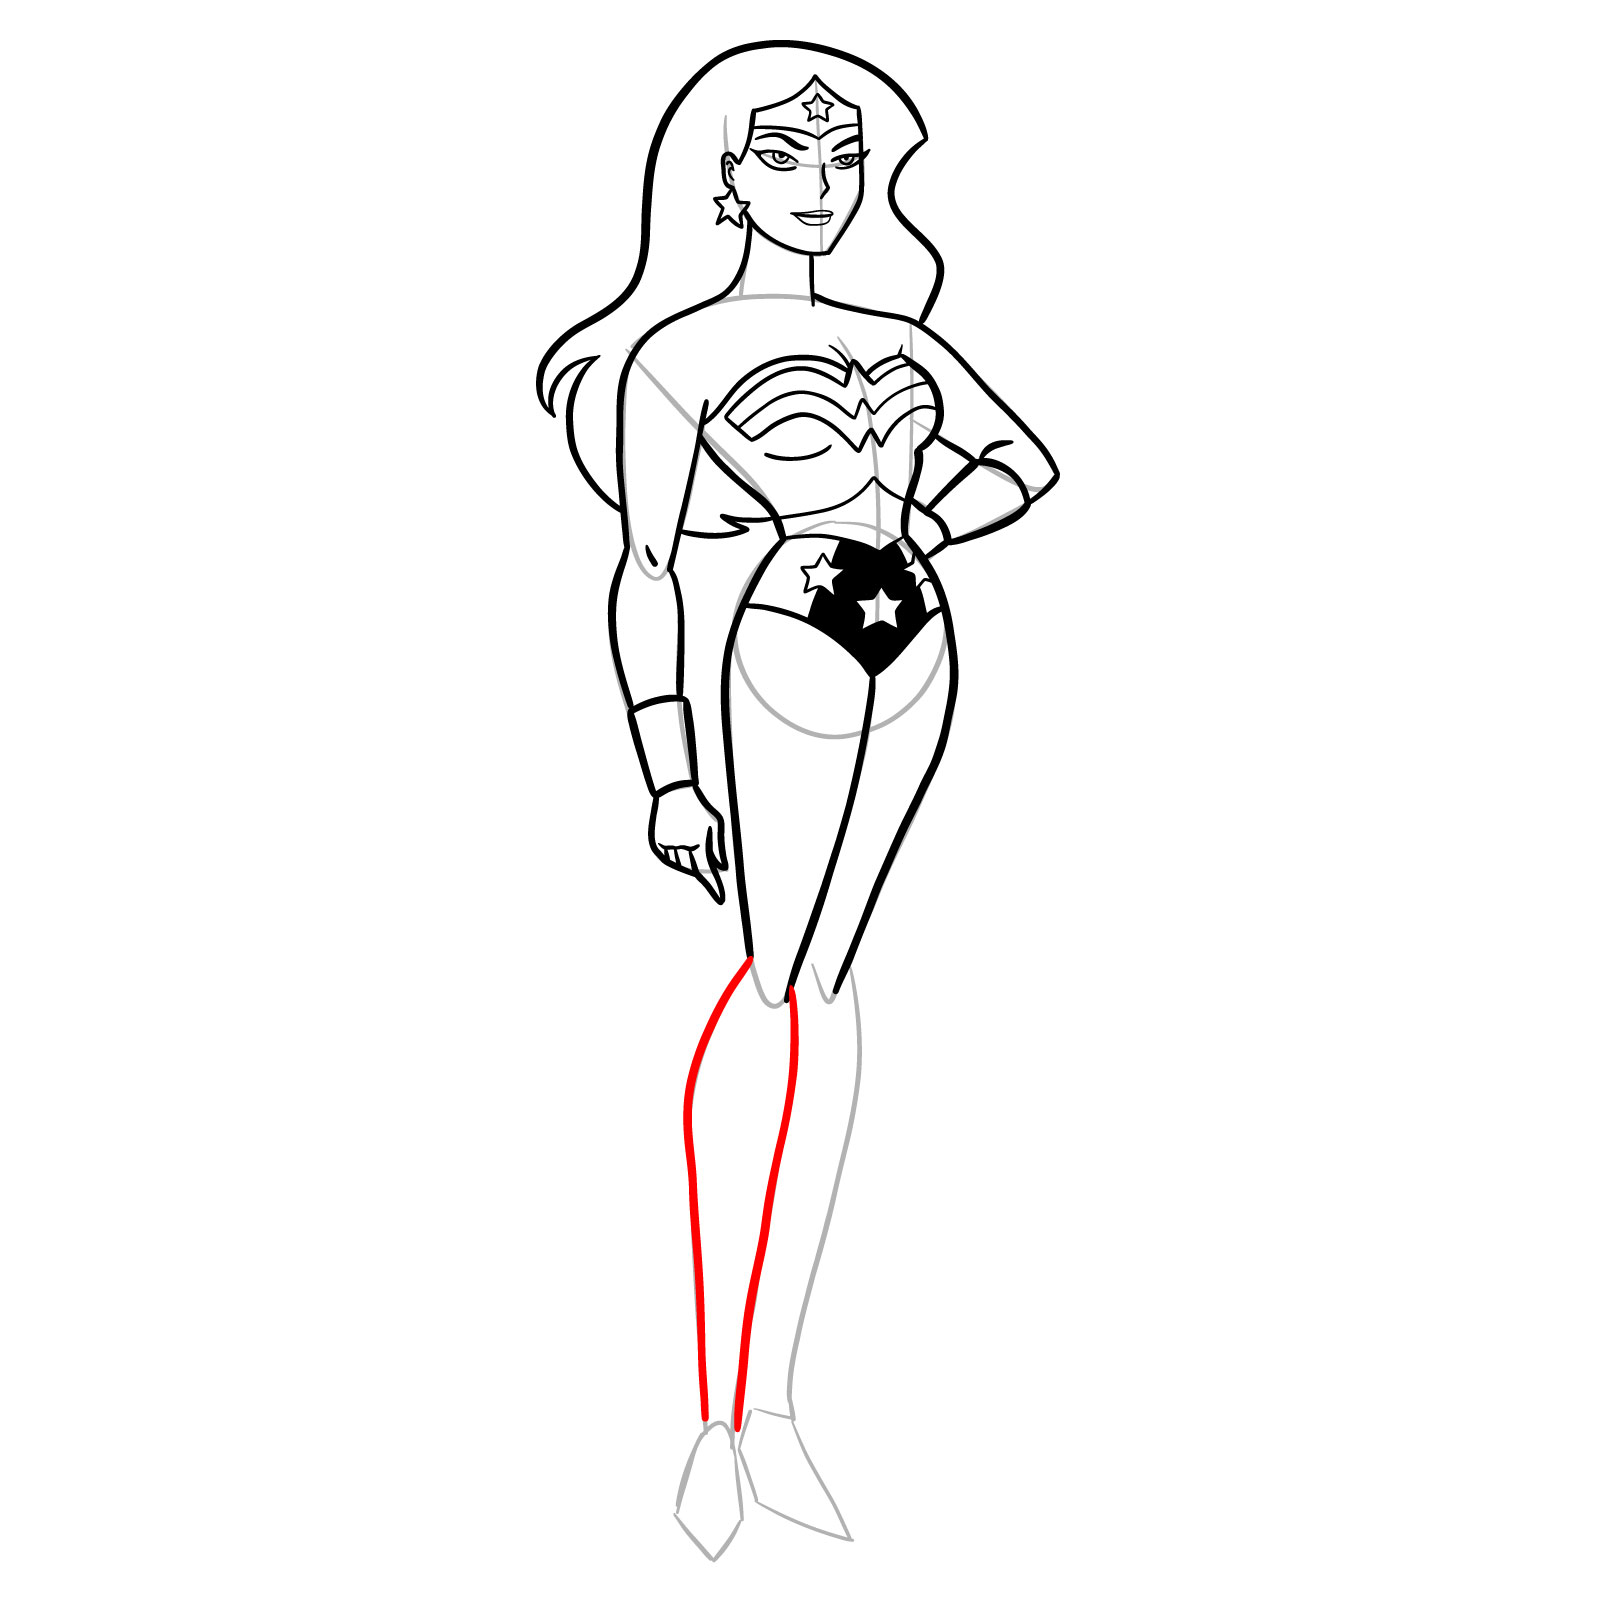 How to draw Wonder Woman cartoon style - step 27